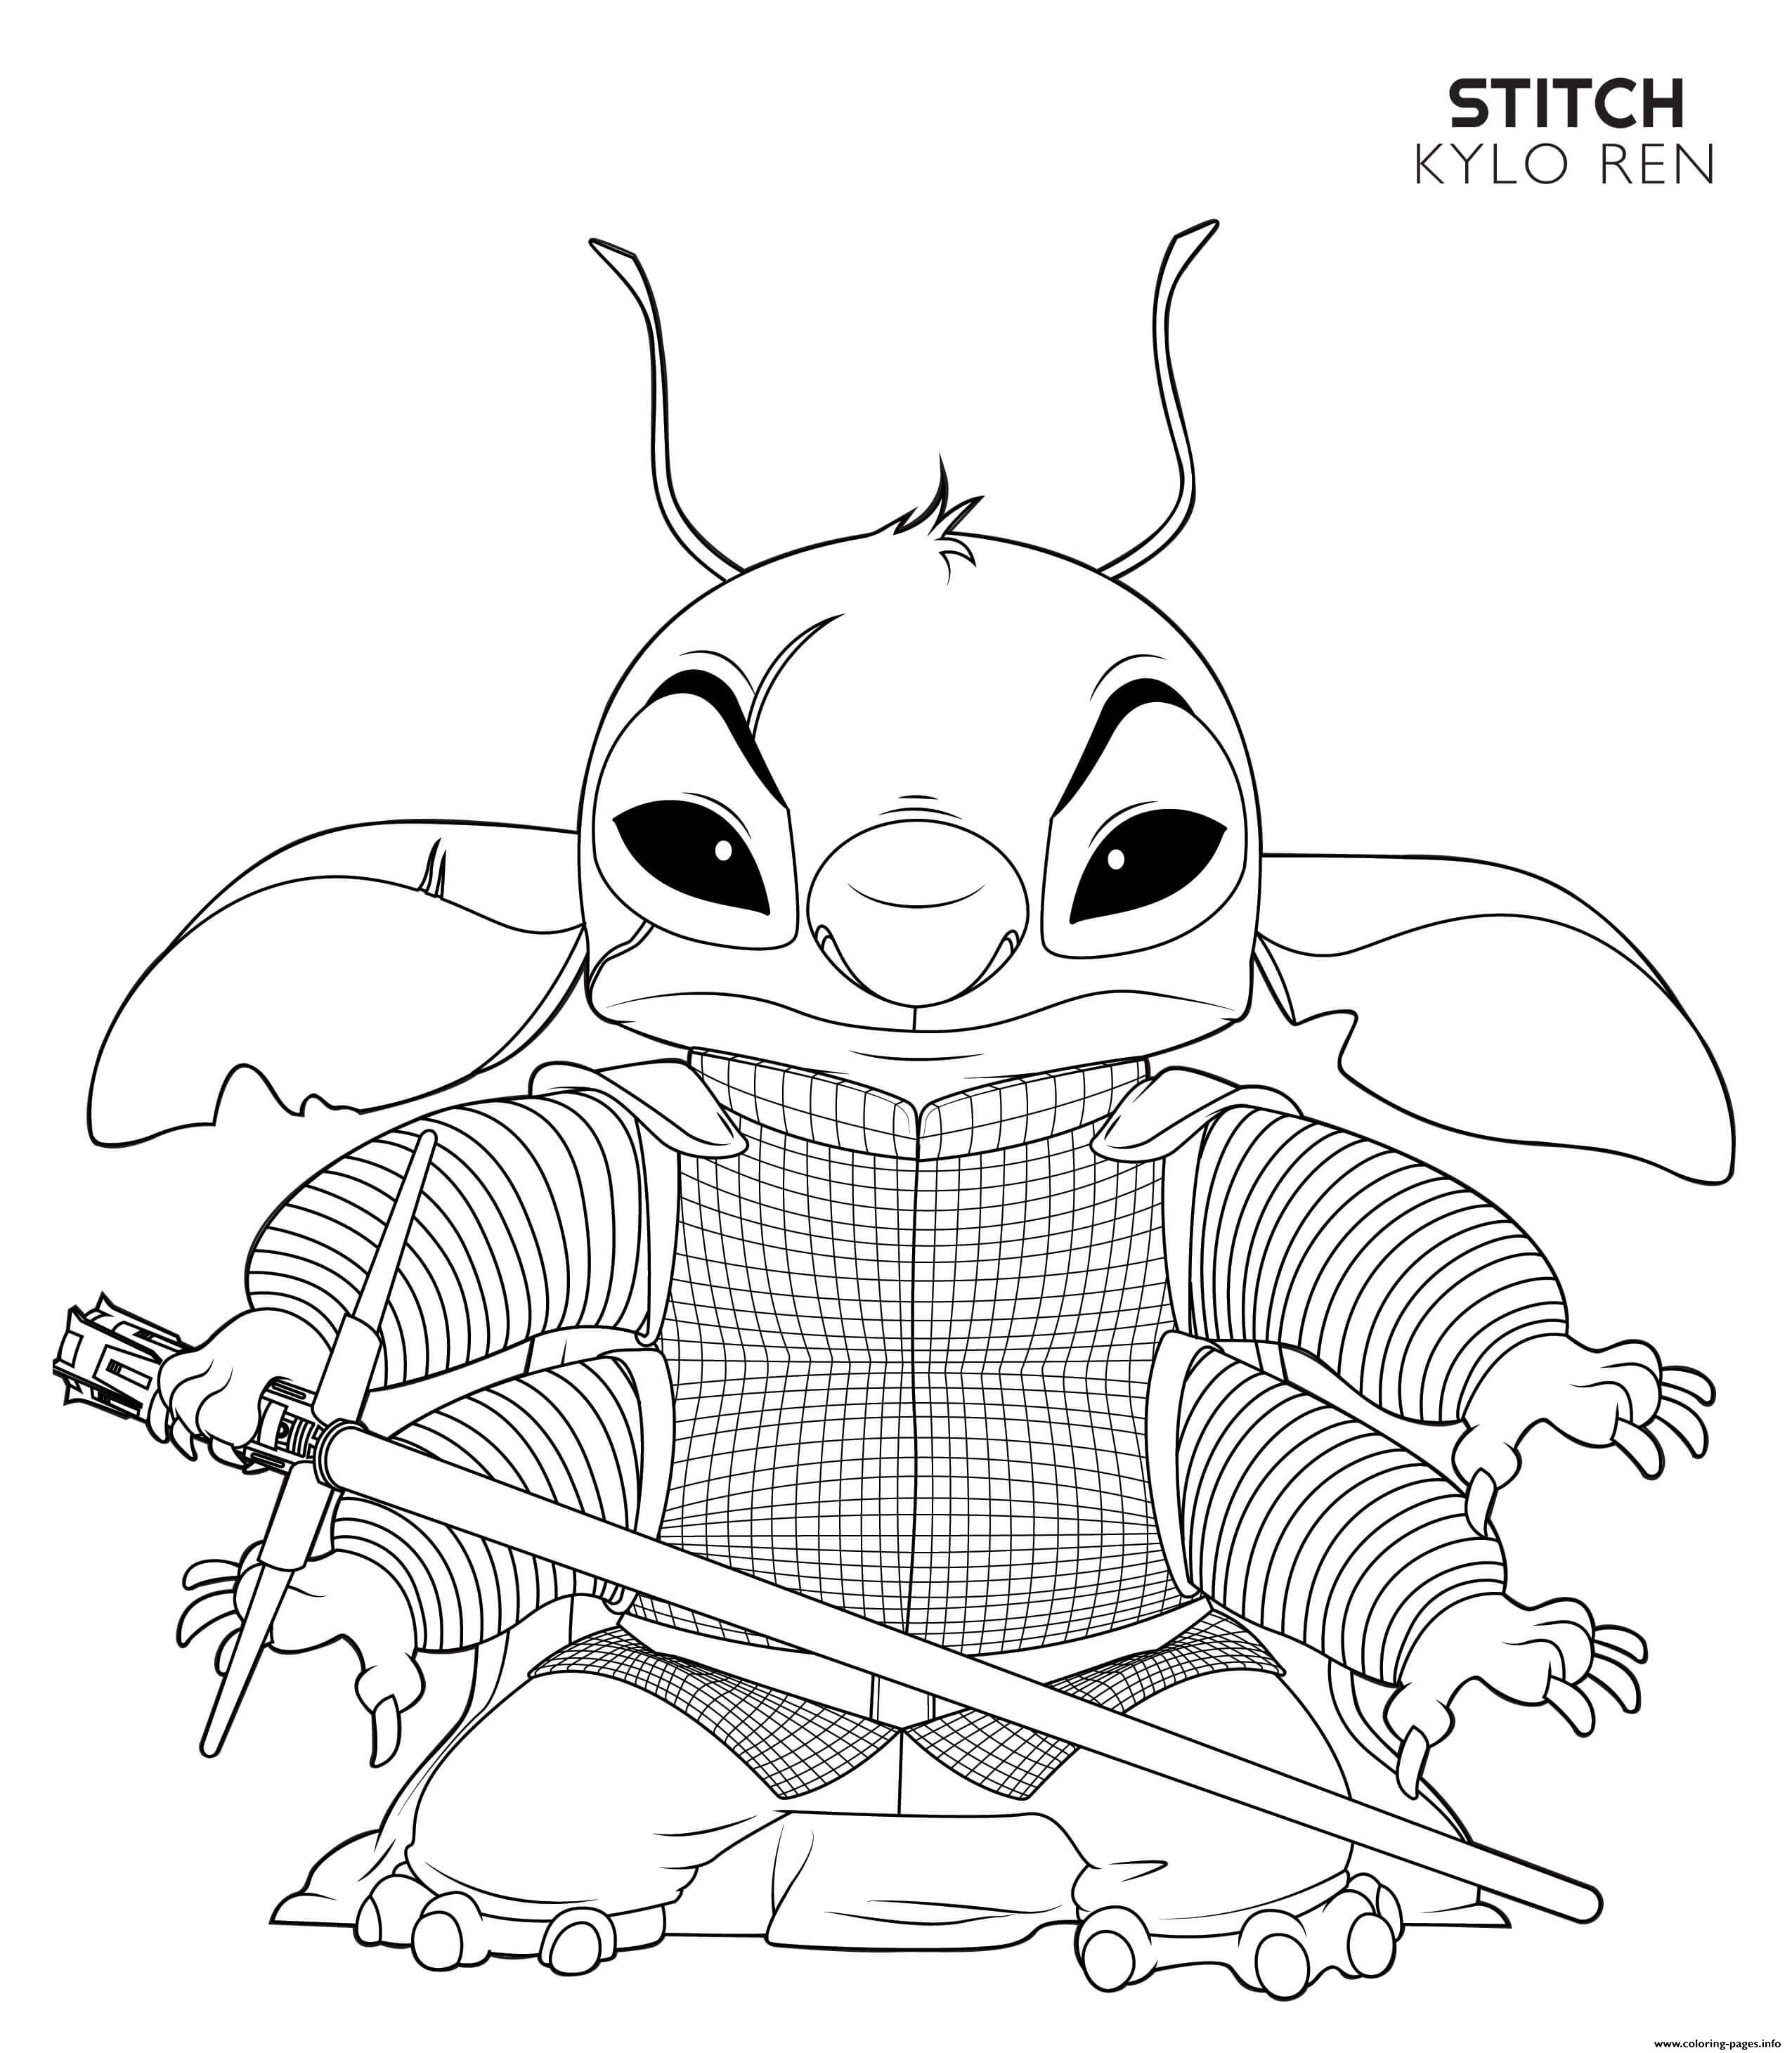 Kylo Ren Stitch Disney Star Wars coloring